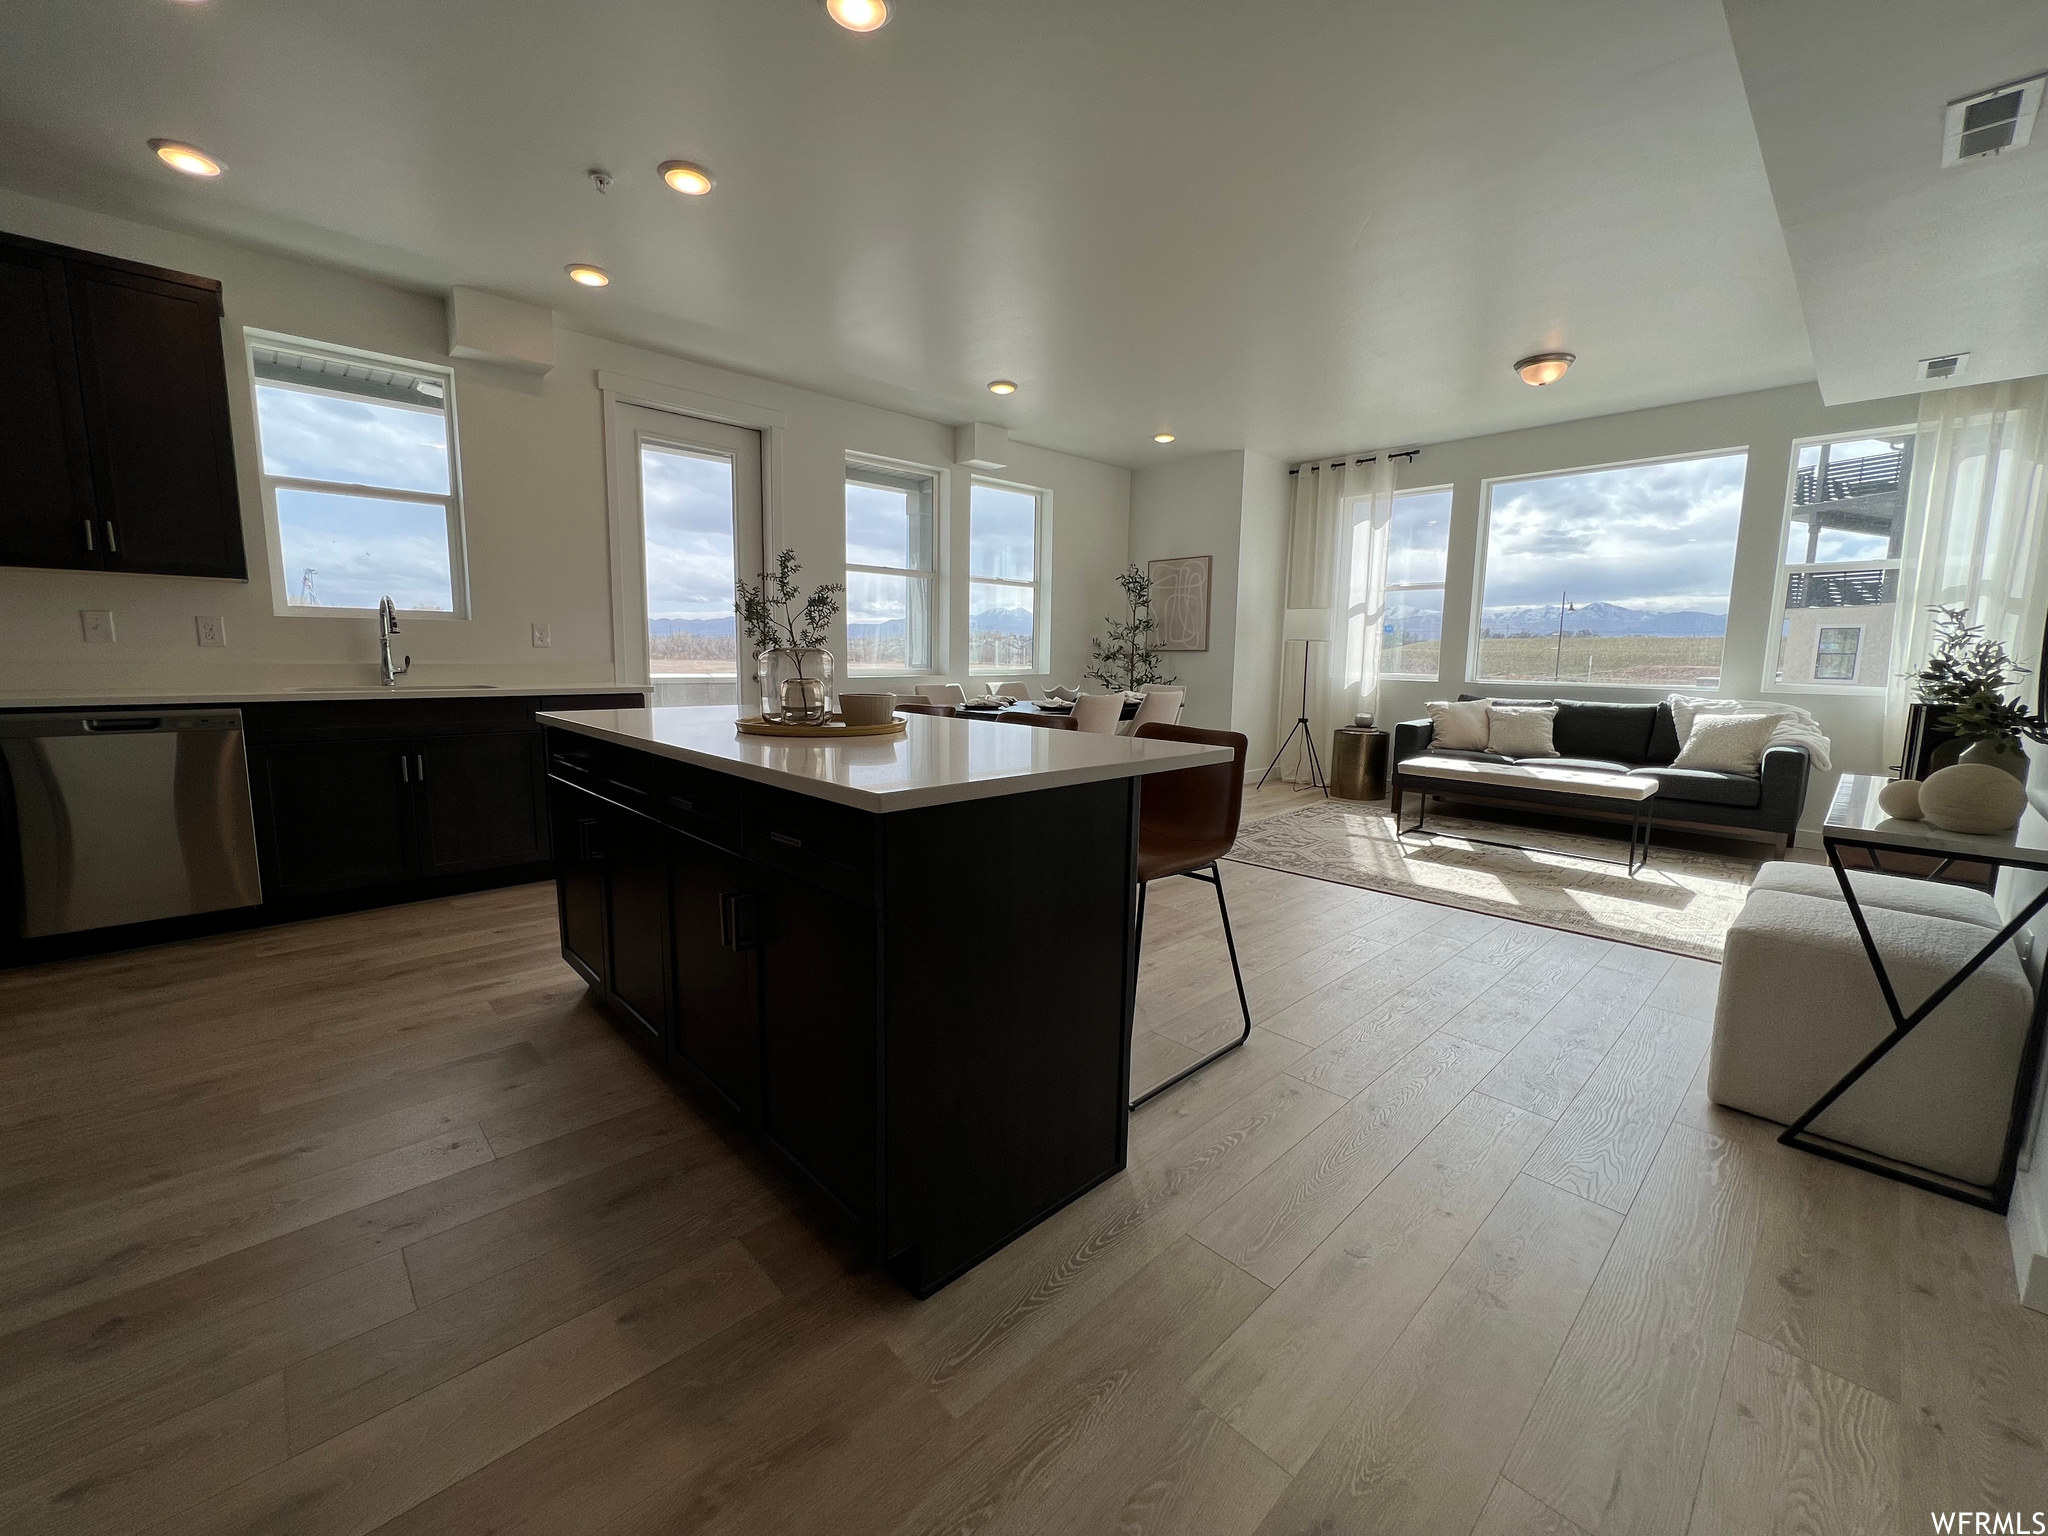 Kitchen featuring a center island, dishwasher, plenty of natural light, and light hardwood / wood-style floors